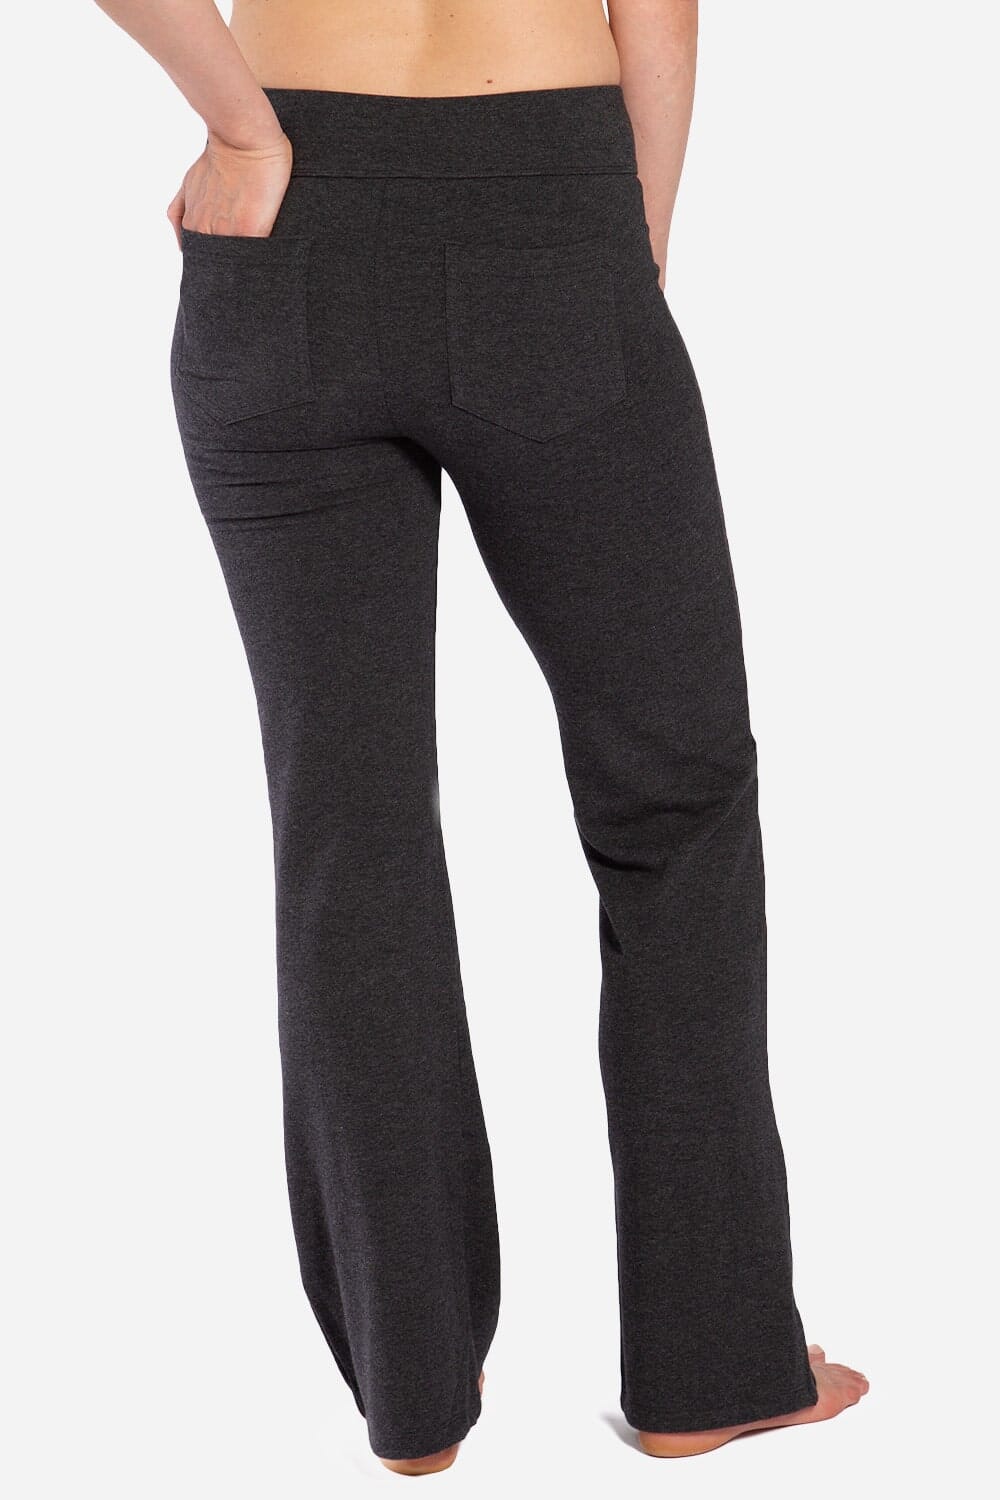 Straight Leg Yoga Pants, 5 Pockets (Charcoal)